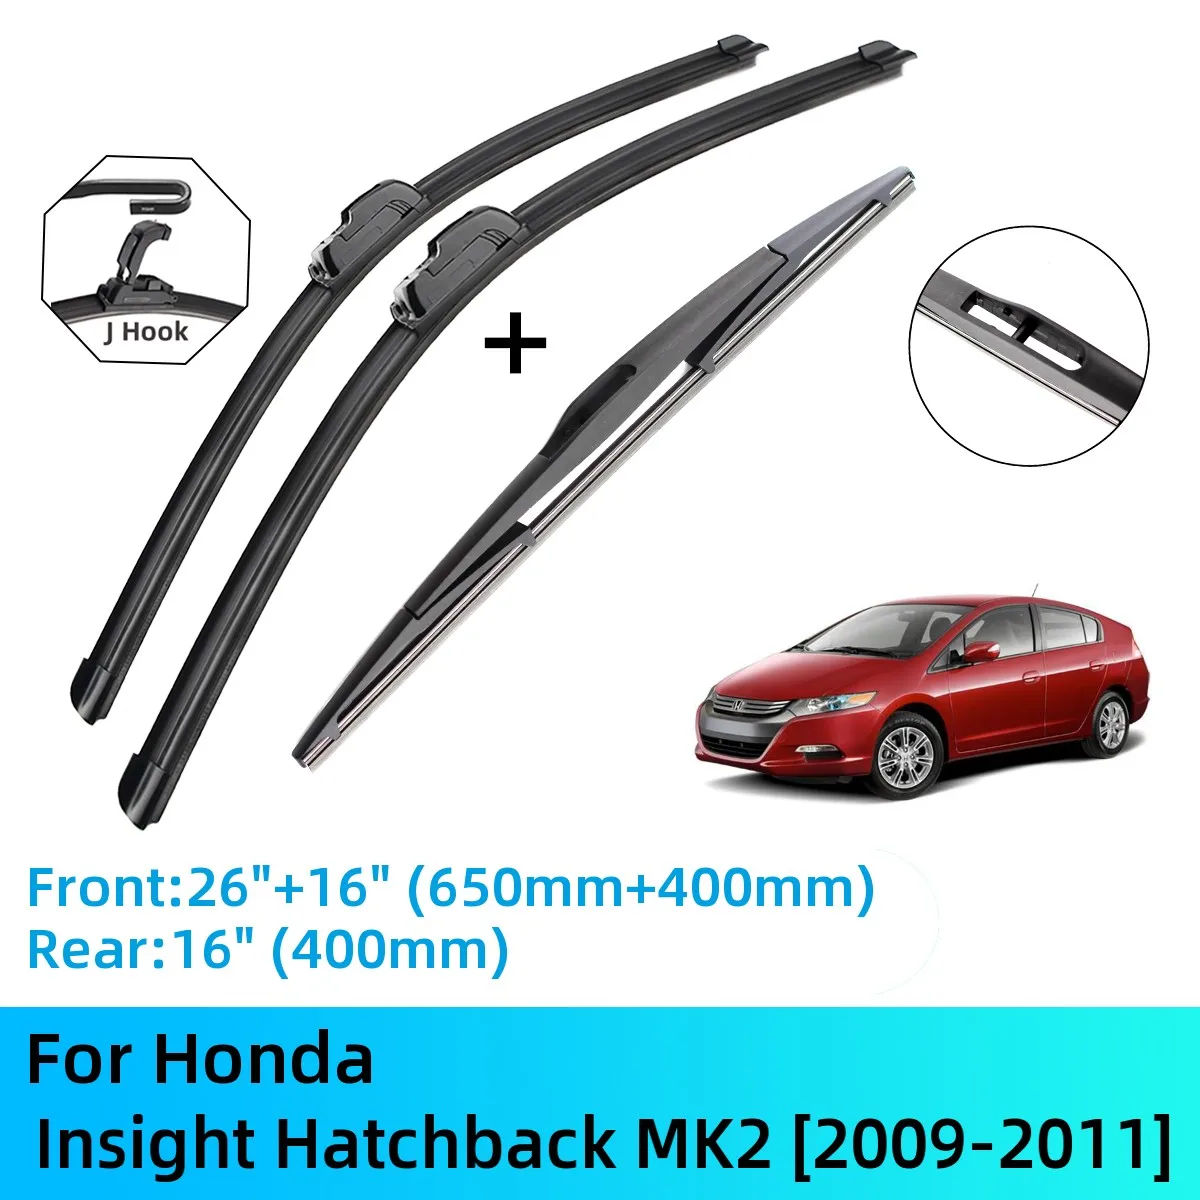 

For Honda Insight Hatchback MK2 Front Rear Wiper Blades Brushes Cutter Accessories J U Hook 2009-2011 2009 2010 2011